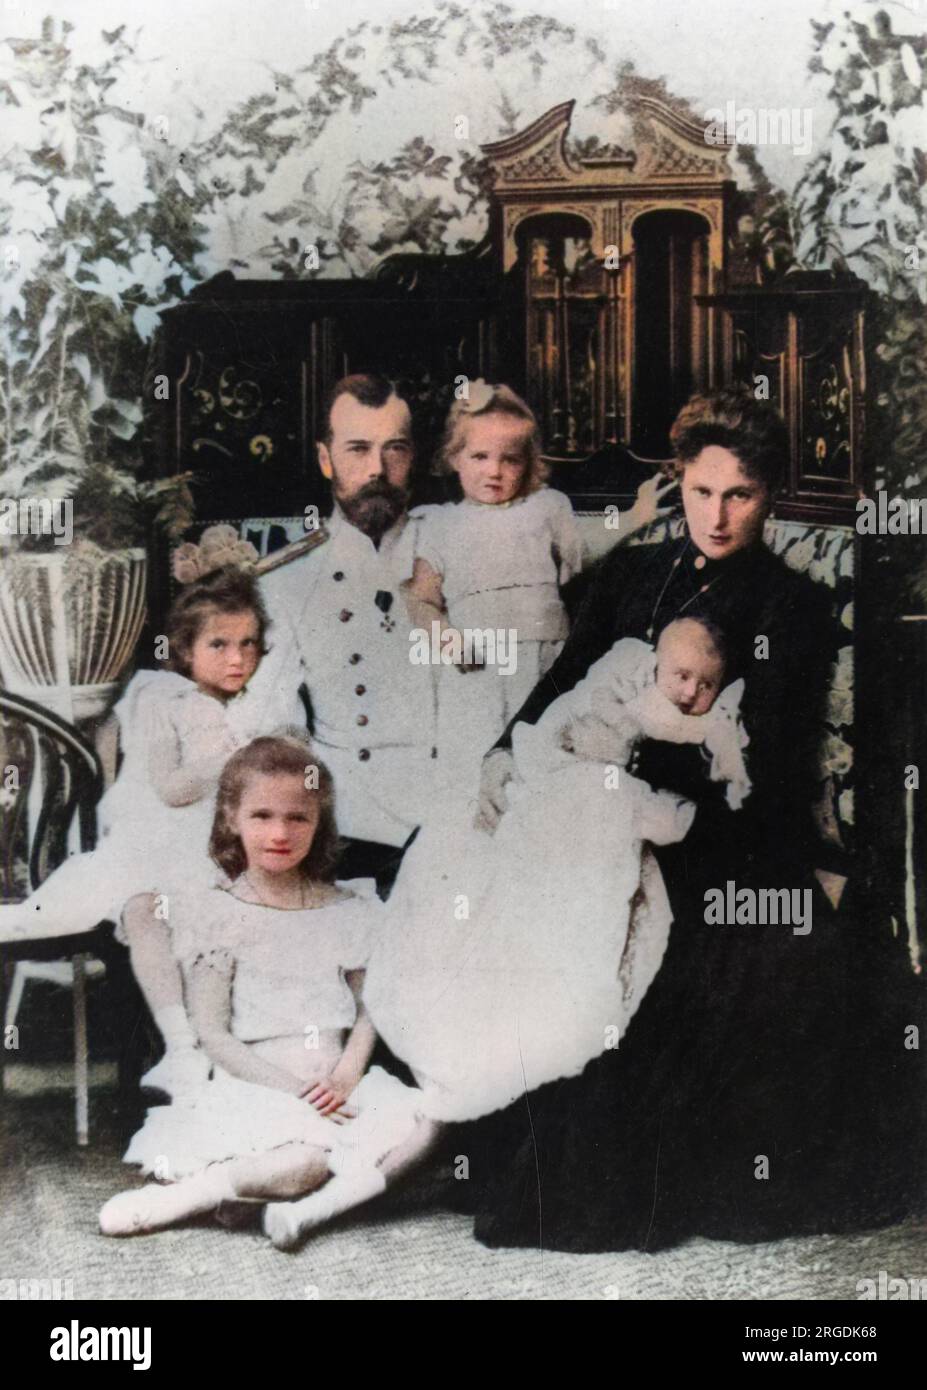 Tsar Nicholas II (1868 - 1918) and his wife, Tsaritsa Alexandra Feodorovna, formerly Princess Alix of Hesse-Darmstadt (1872 - 1918) and their four eldest children, the Grand Princesses Olga, Tatiana, Marie and Anastasia. Stock Photo